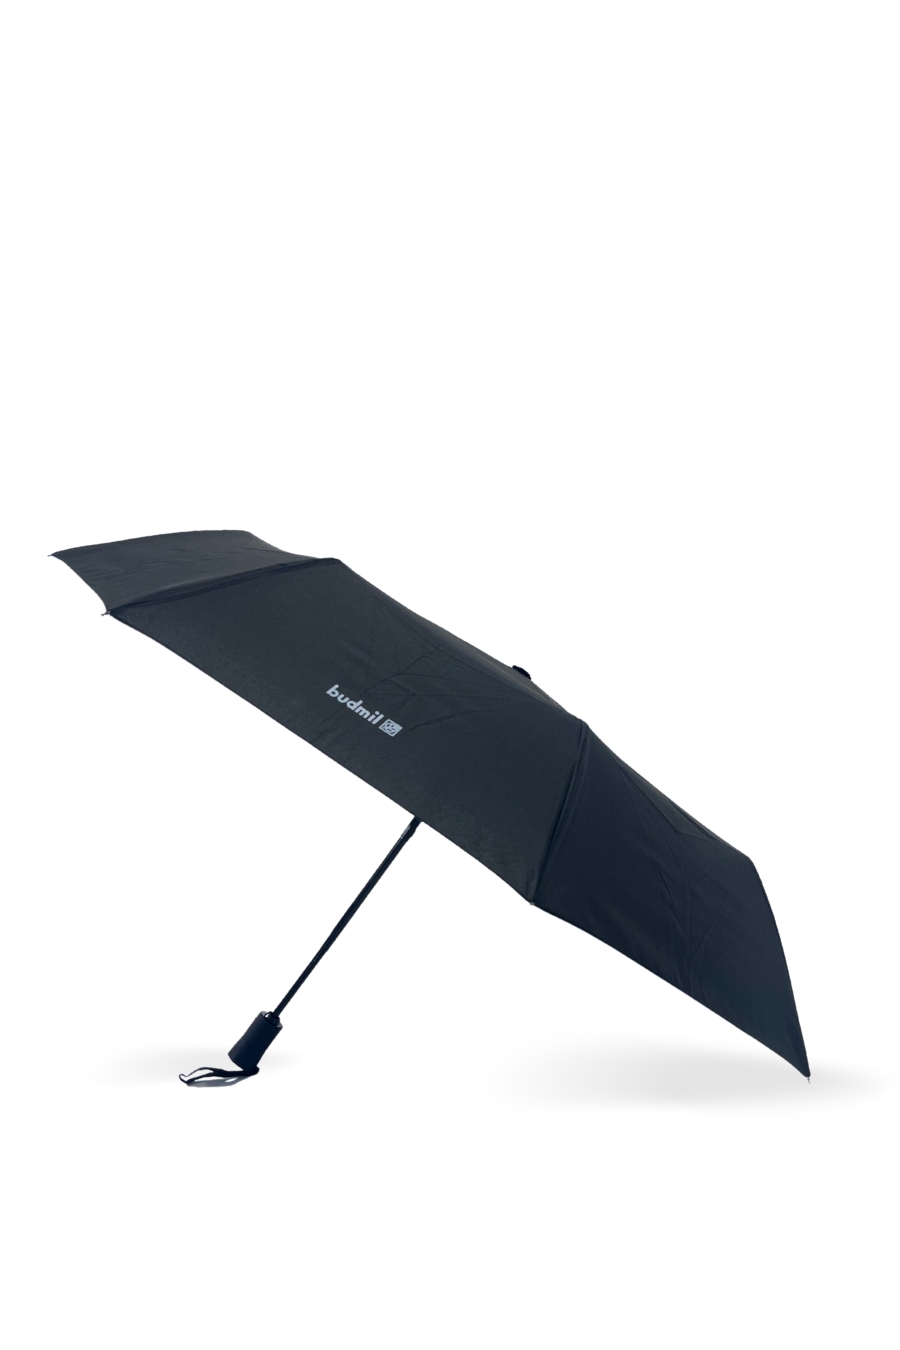 budmil esernyő